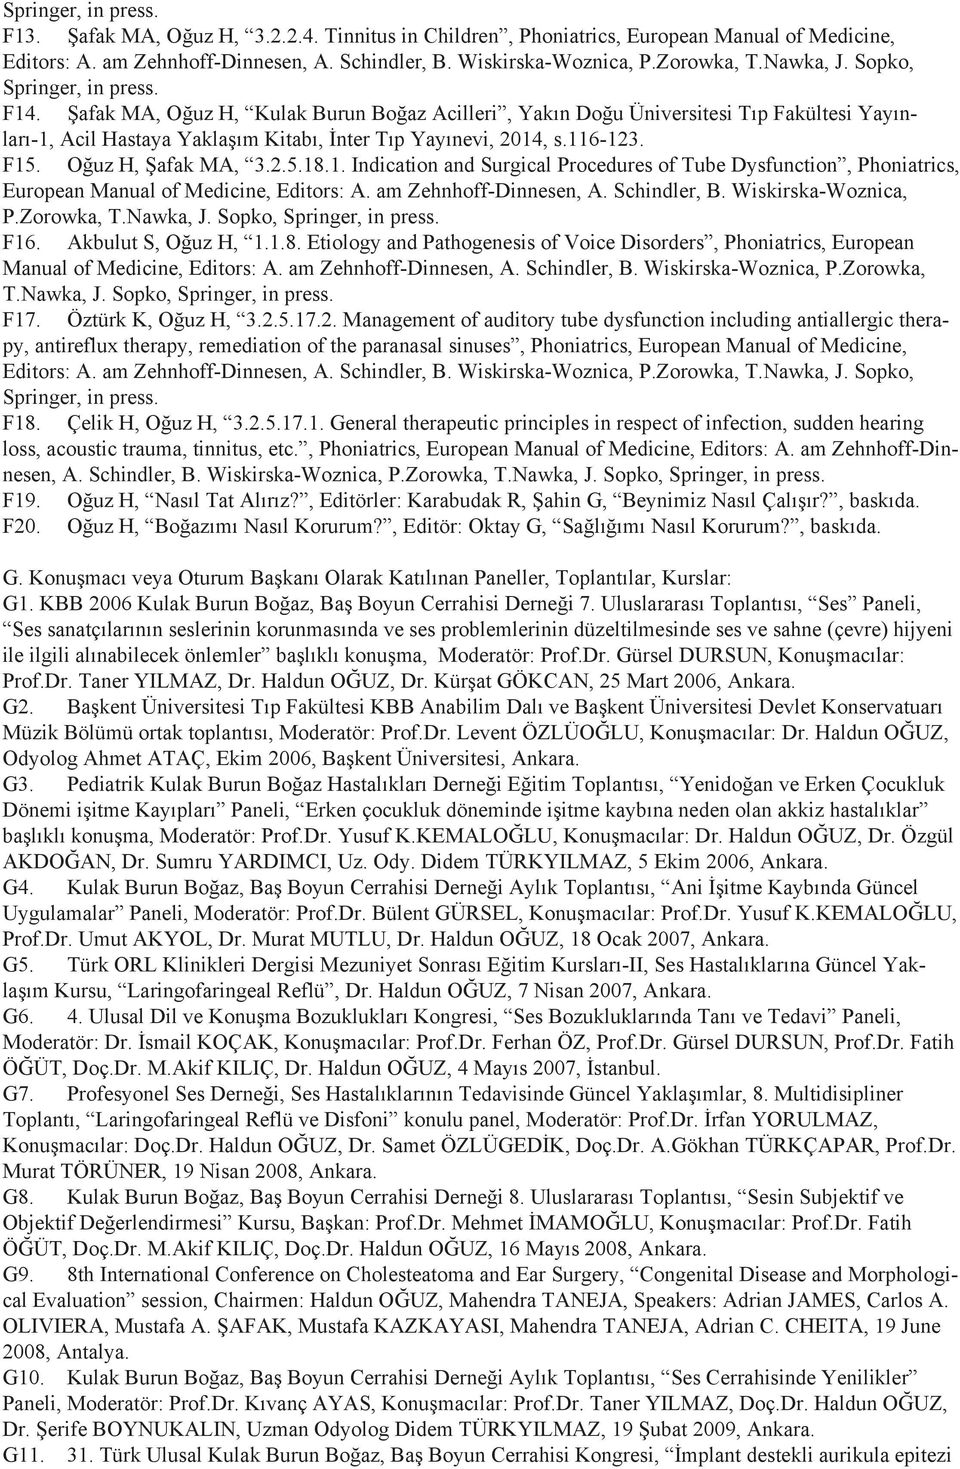 116-123. F15. Oğuz H, Şafak MA, 3.2.5.18.1. Indication and Surgical Procedures of Tube Dysfunction, Phoniatrics, European Manual of Medicine, Editors: A. am Zehnhoff-Dinnesen, A. Schindler, B.